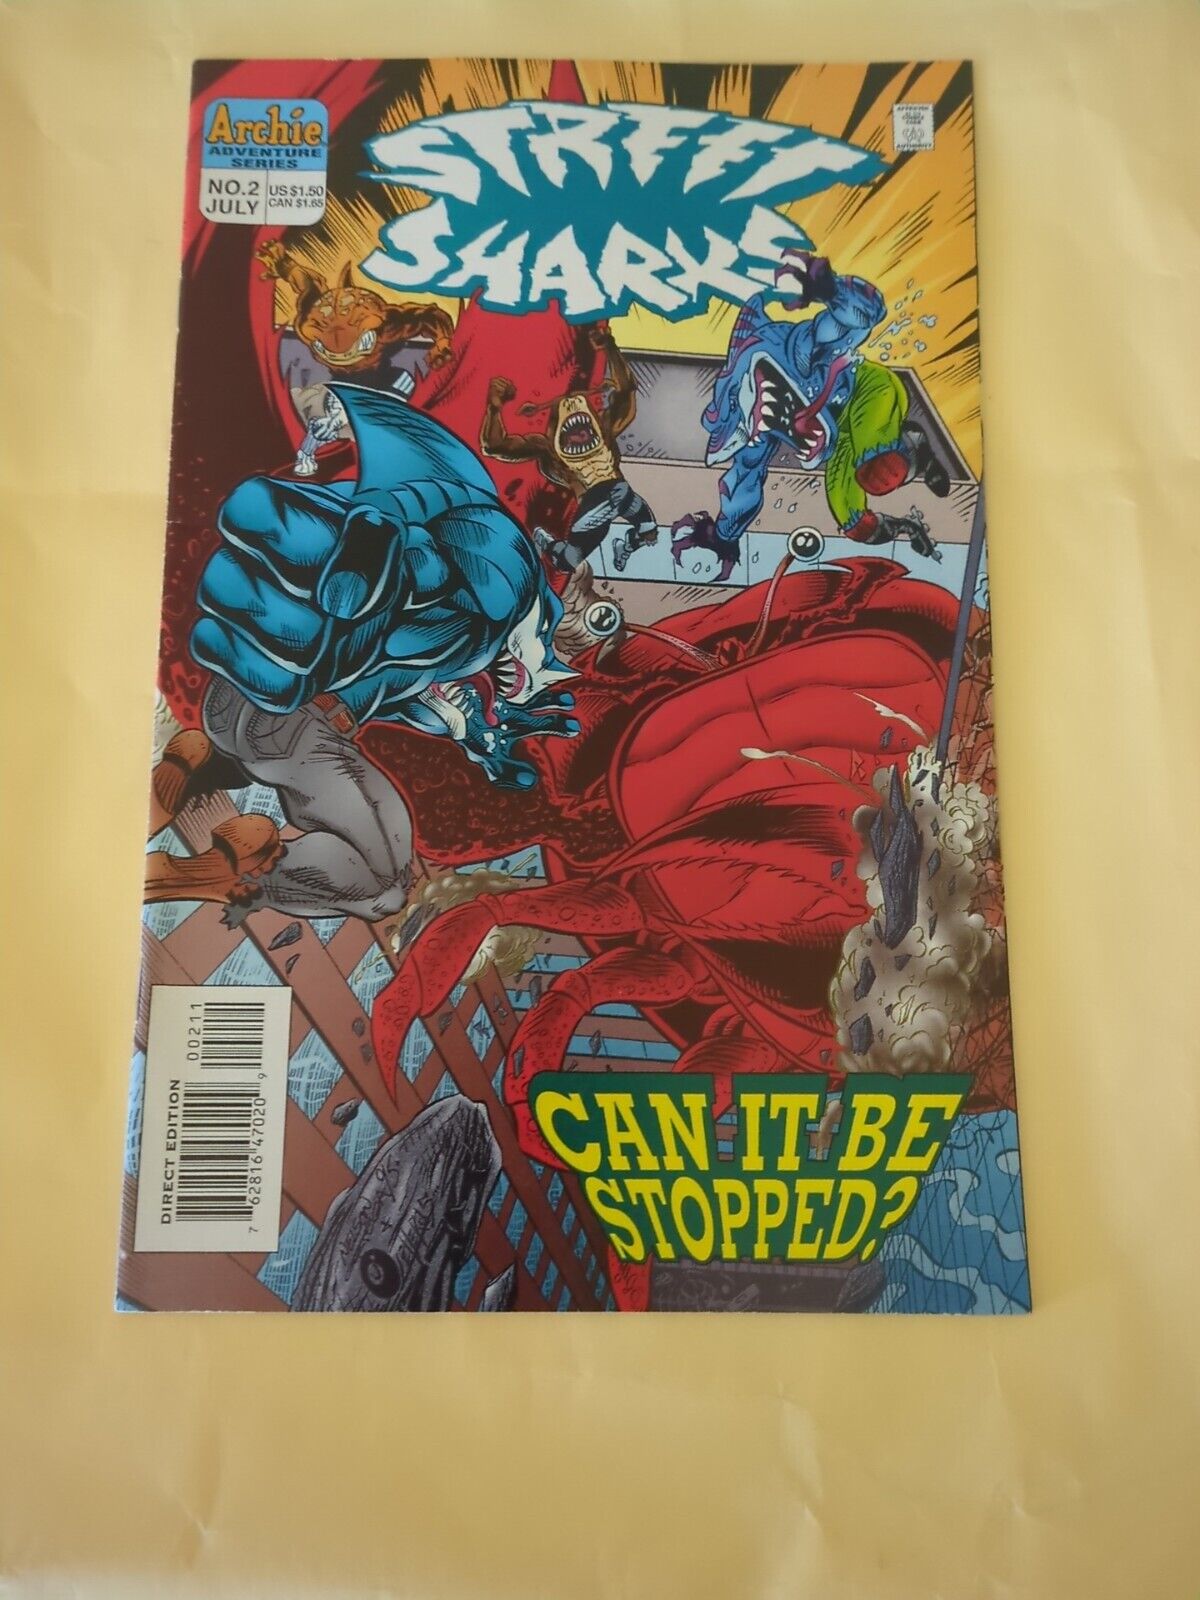 Street Sharks #2 Vol. 2, ARCHIE COMICS, (1996) Newsstand copy, Good condition